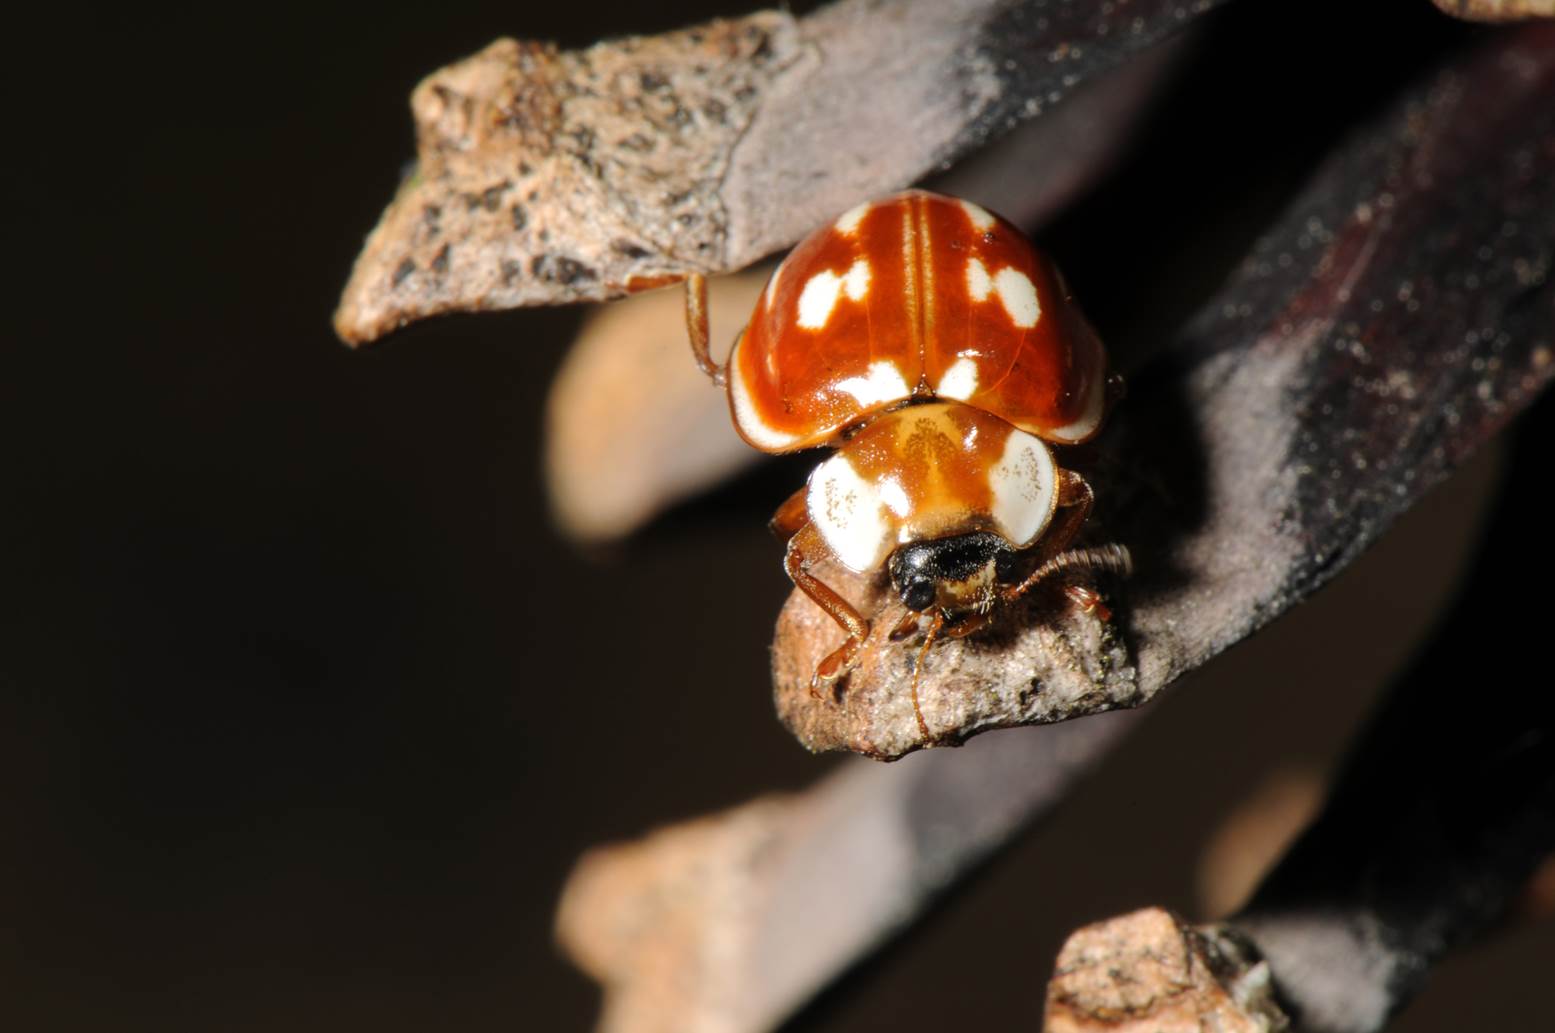 A ladybug on a leaf

Description automatically generated with medium confidence